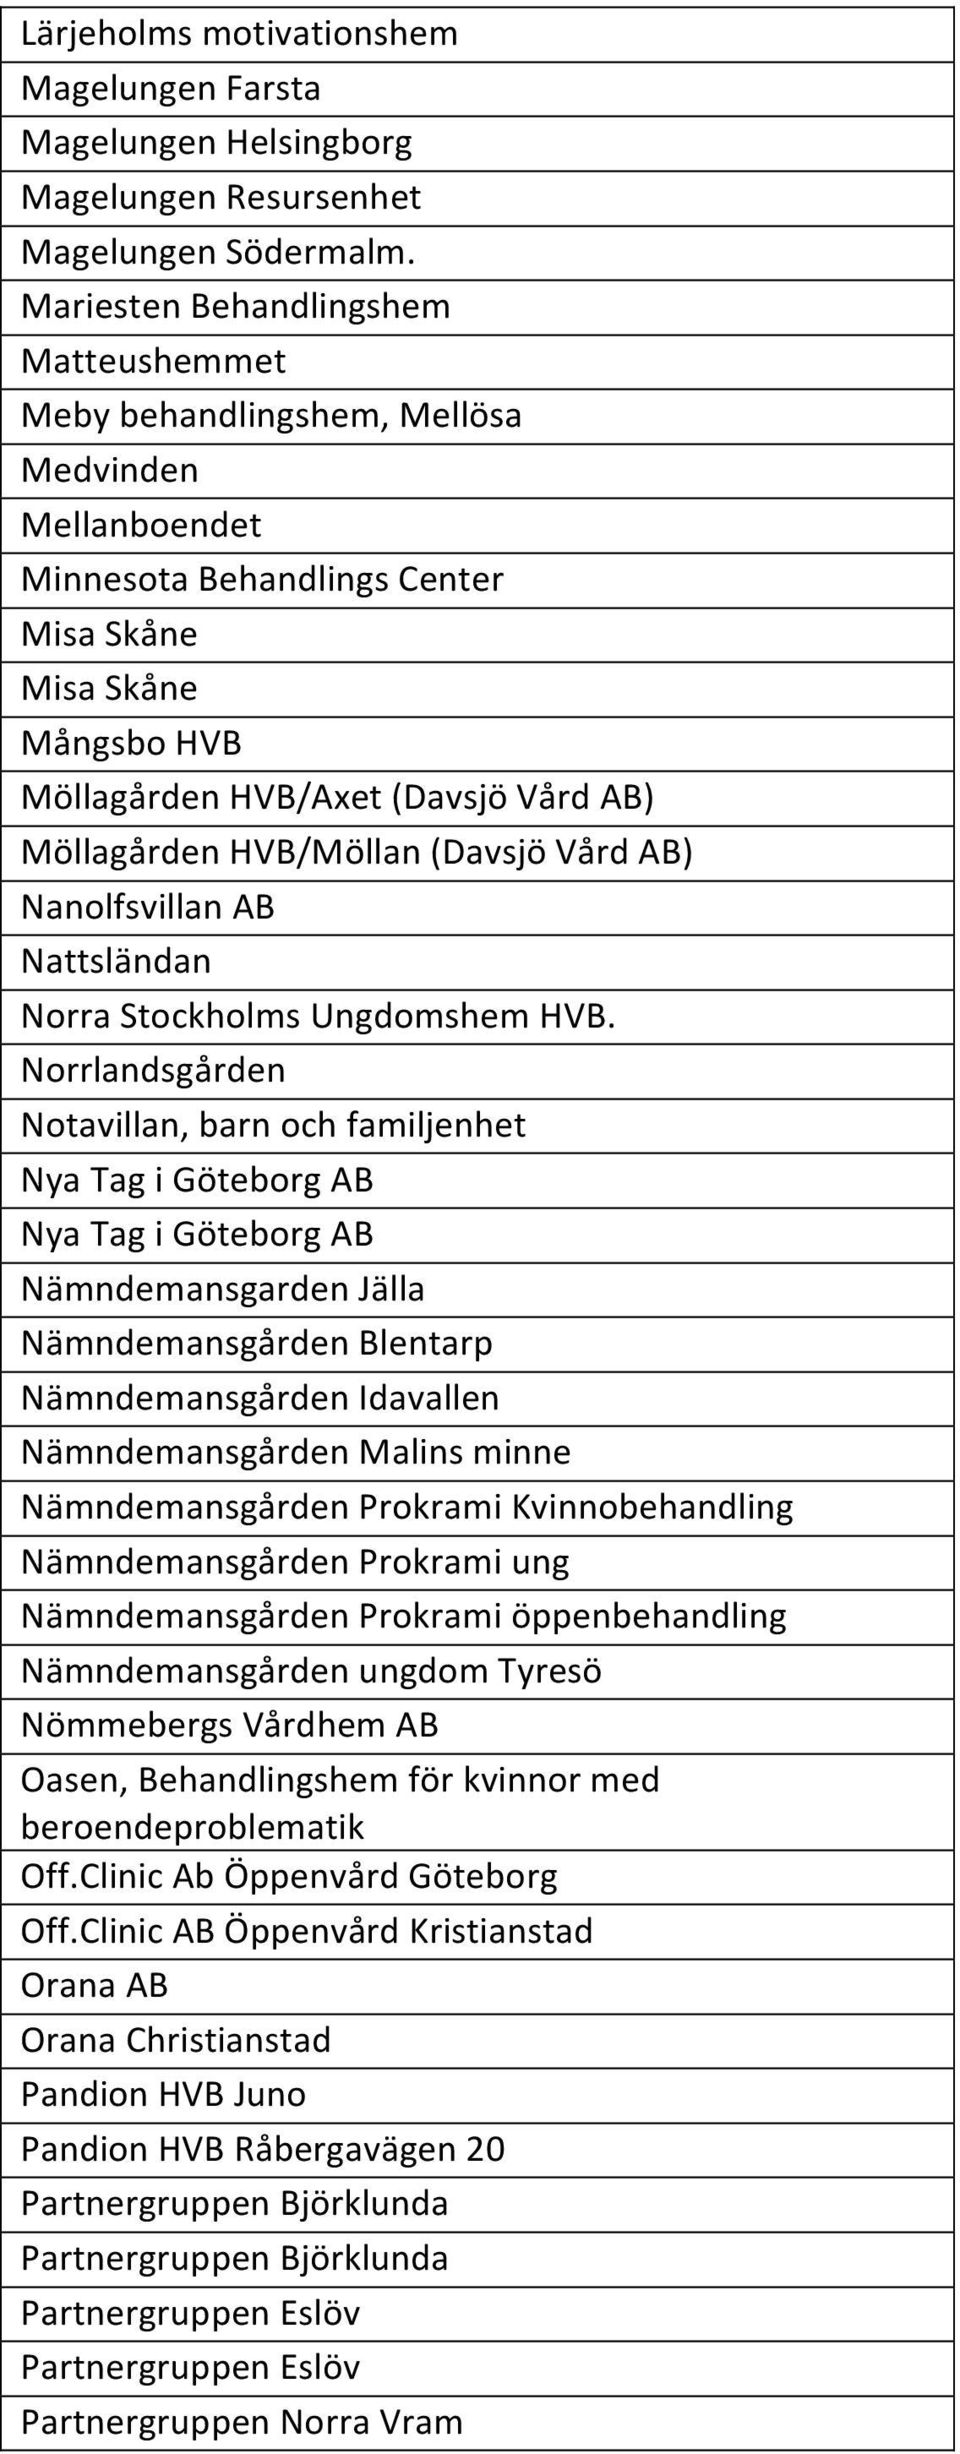 Möllagården HVB/Möllan (Davsjö Vård AB) Nanolfsvillan AB Nattsländan Norra Stockholms Ungdomshem HVB.